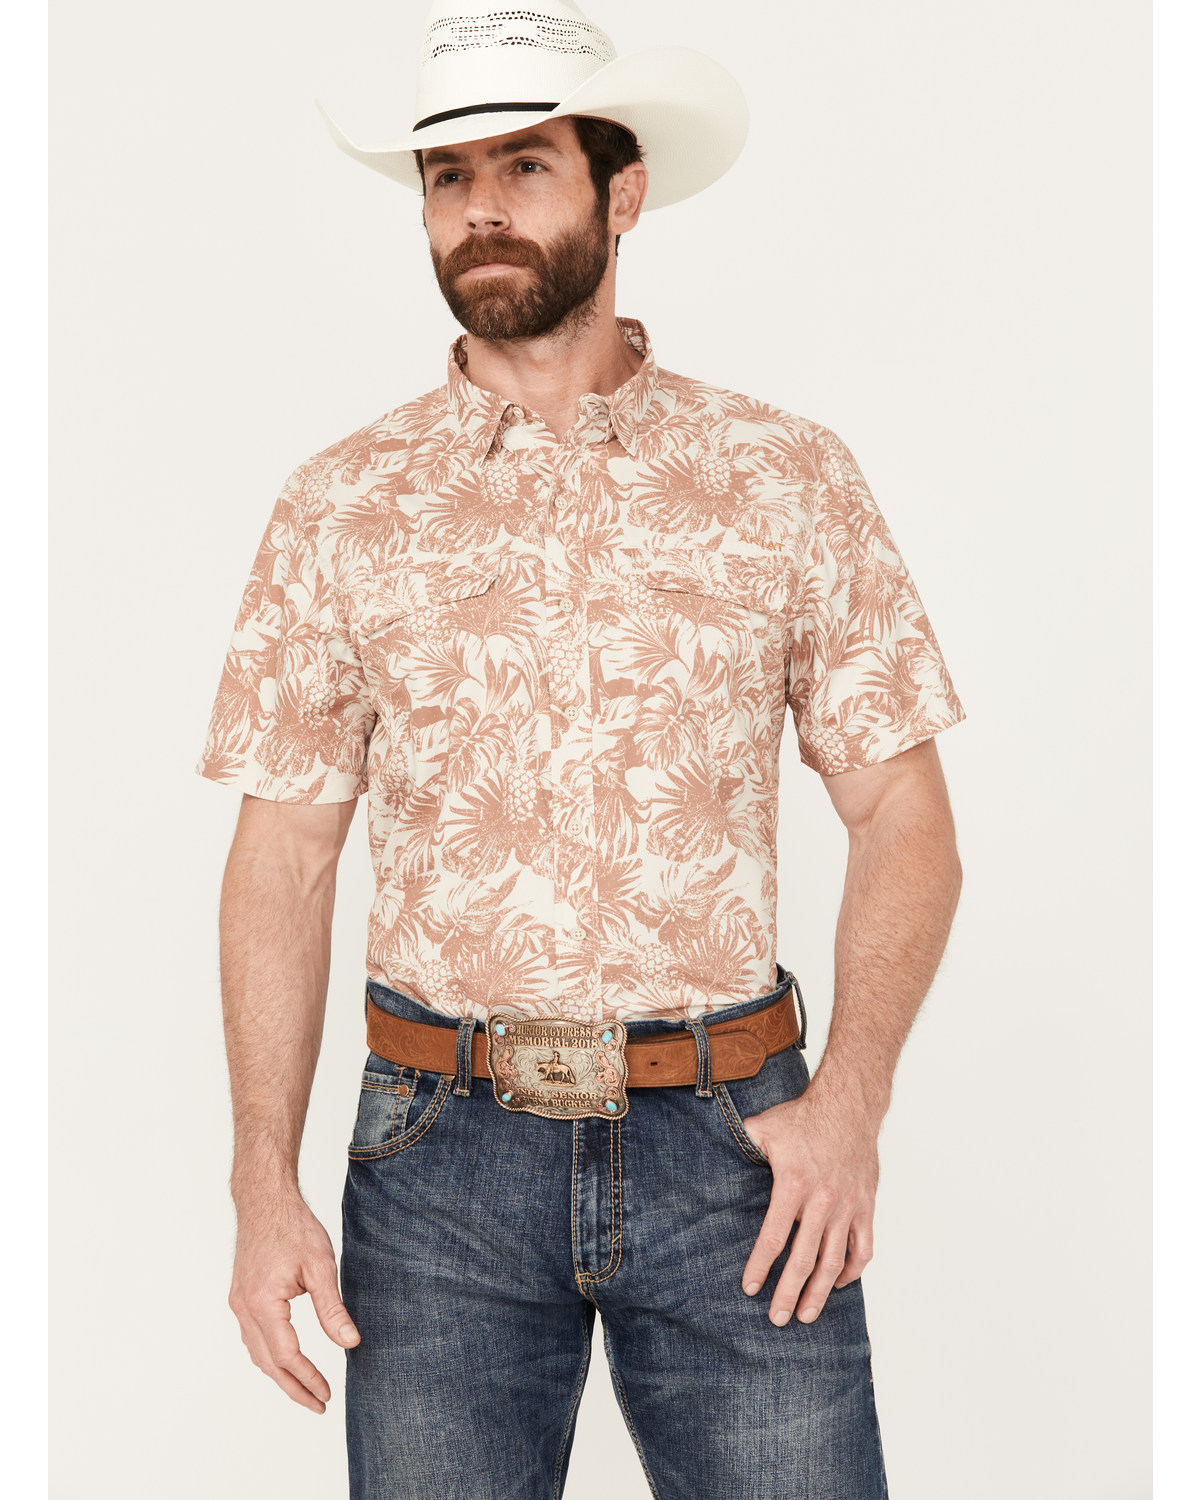 Ariat Men's VentTEK Outbound Floral Print Fitted Short Sleeve Button-Down Shirt